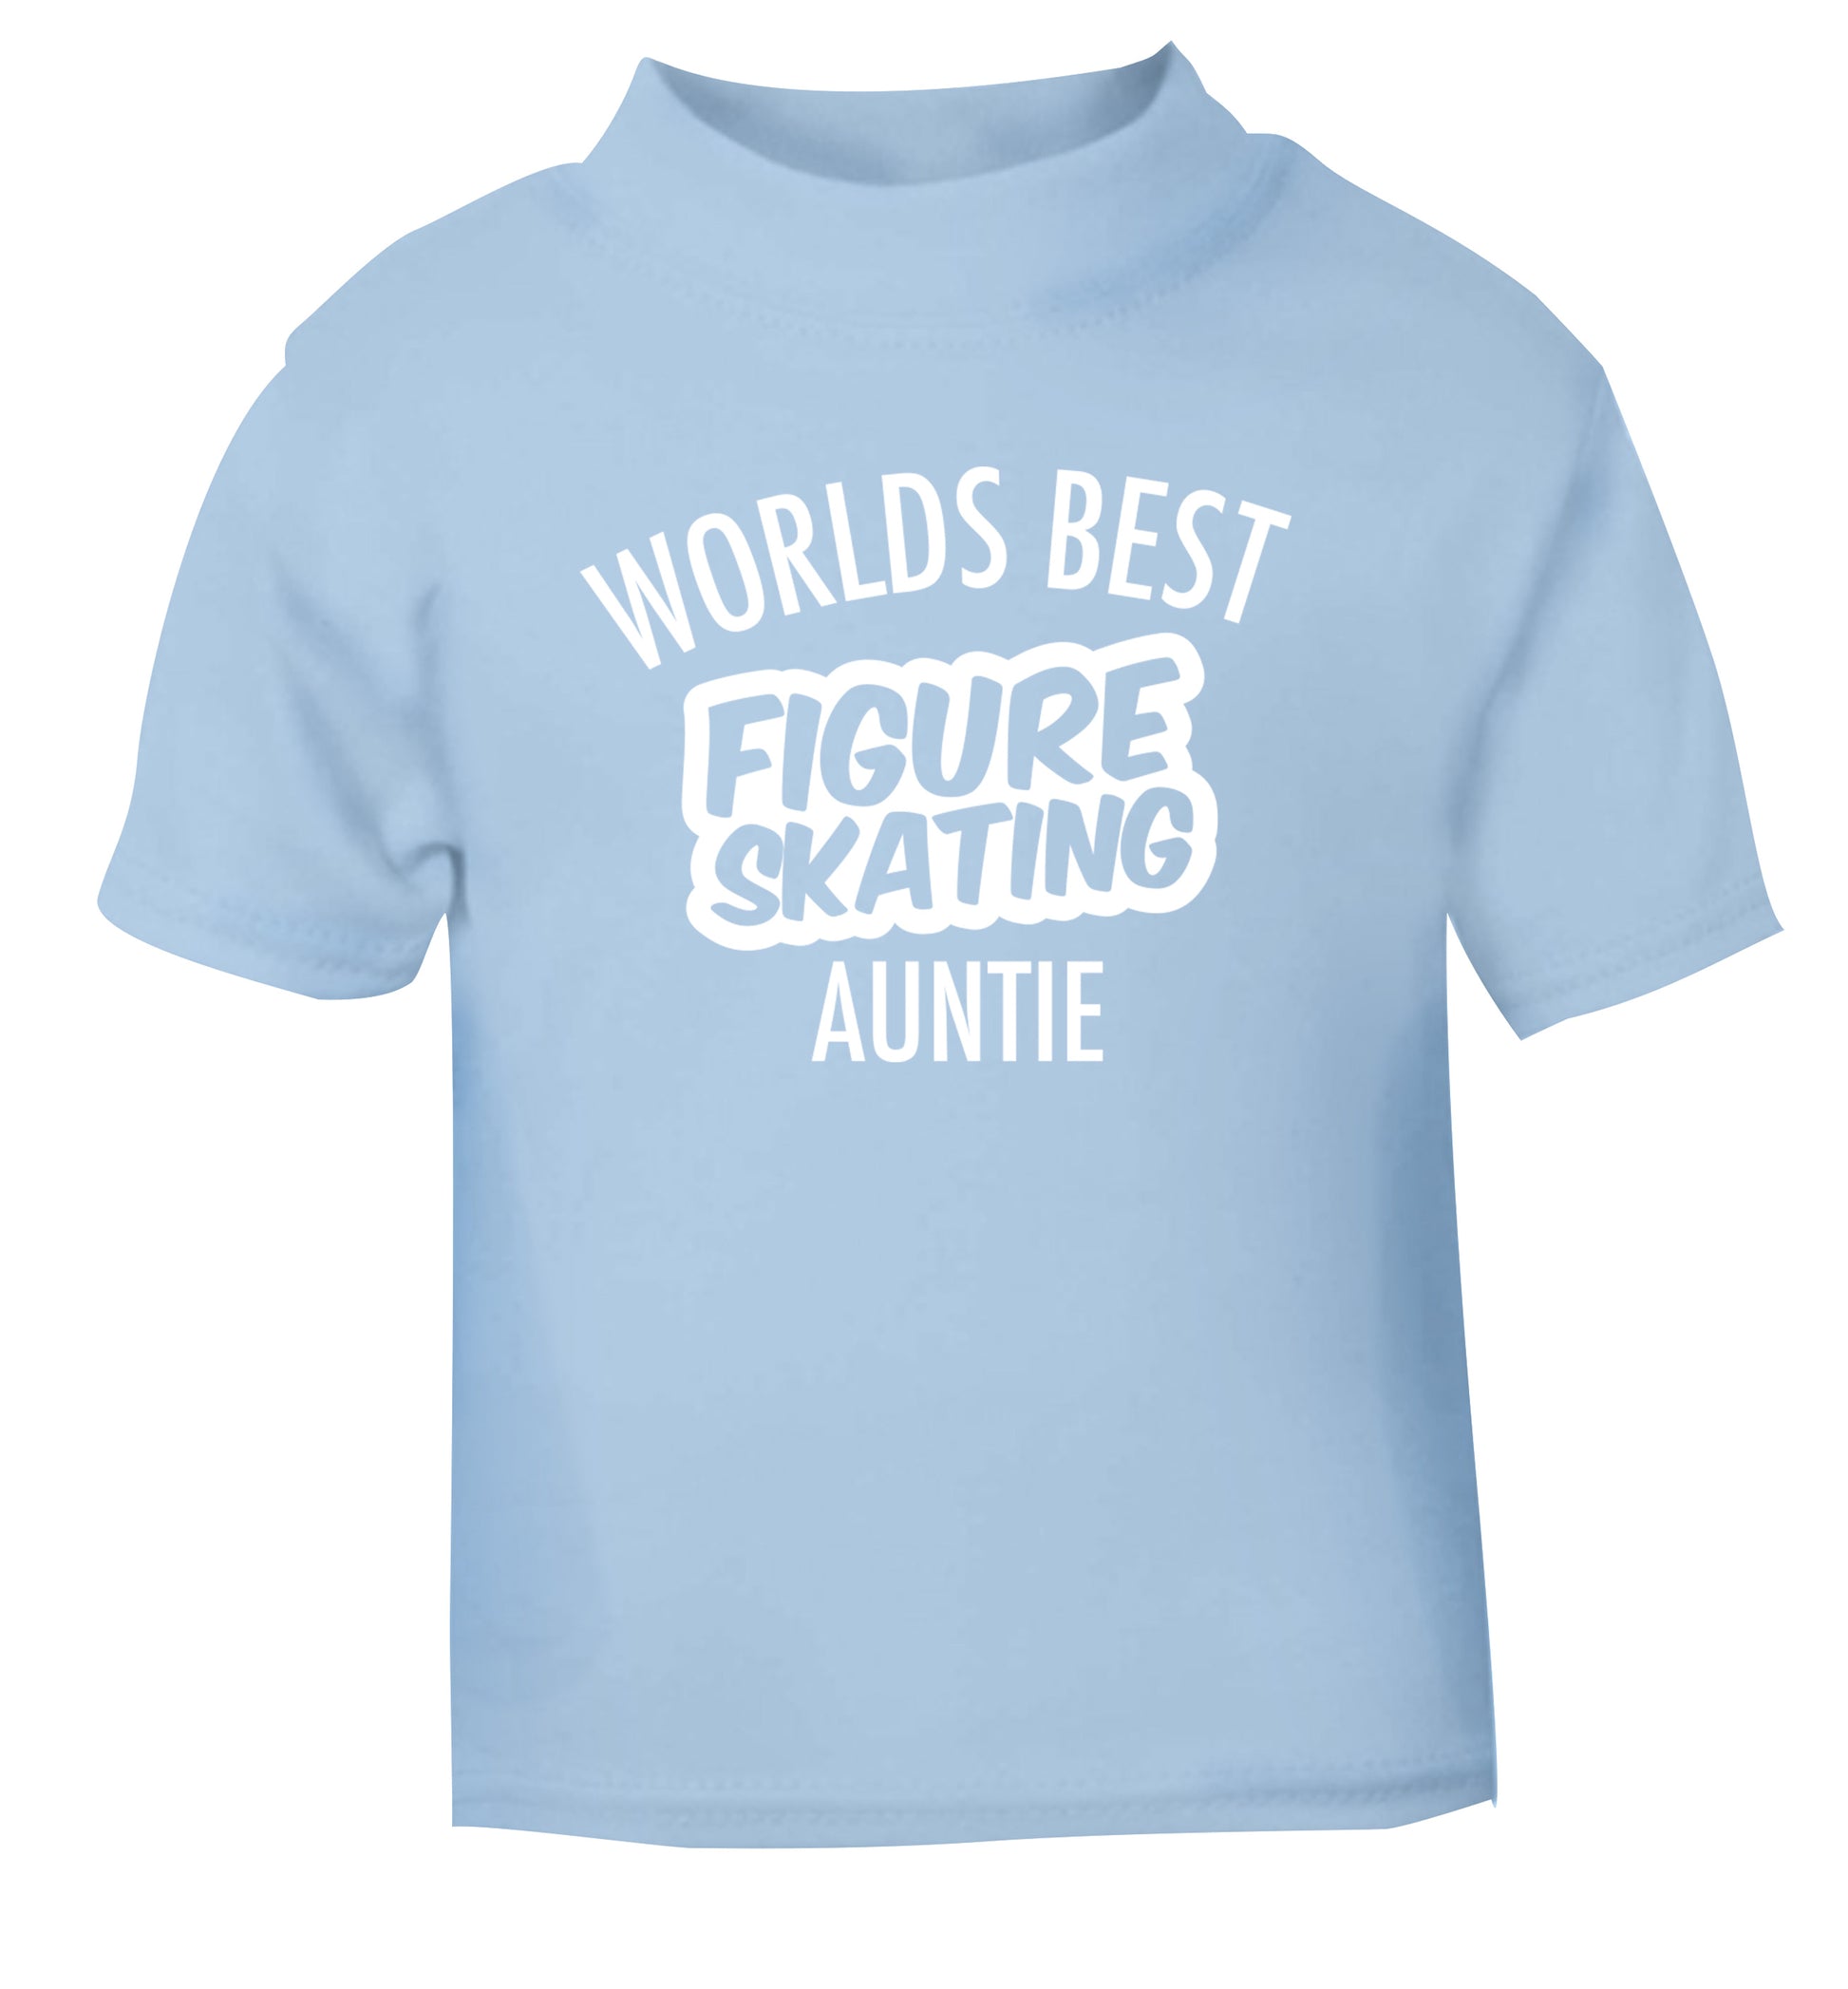 Worlds best figure skating auntie light blue Baby Toddler Tshirt 2 Years